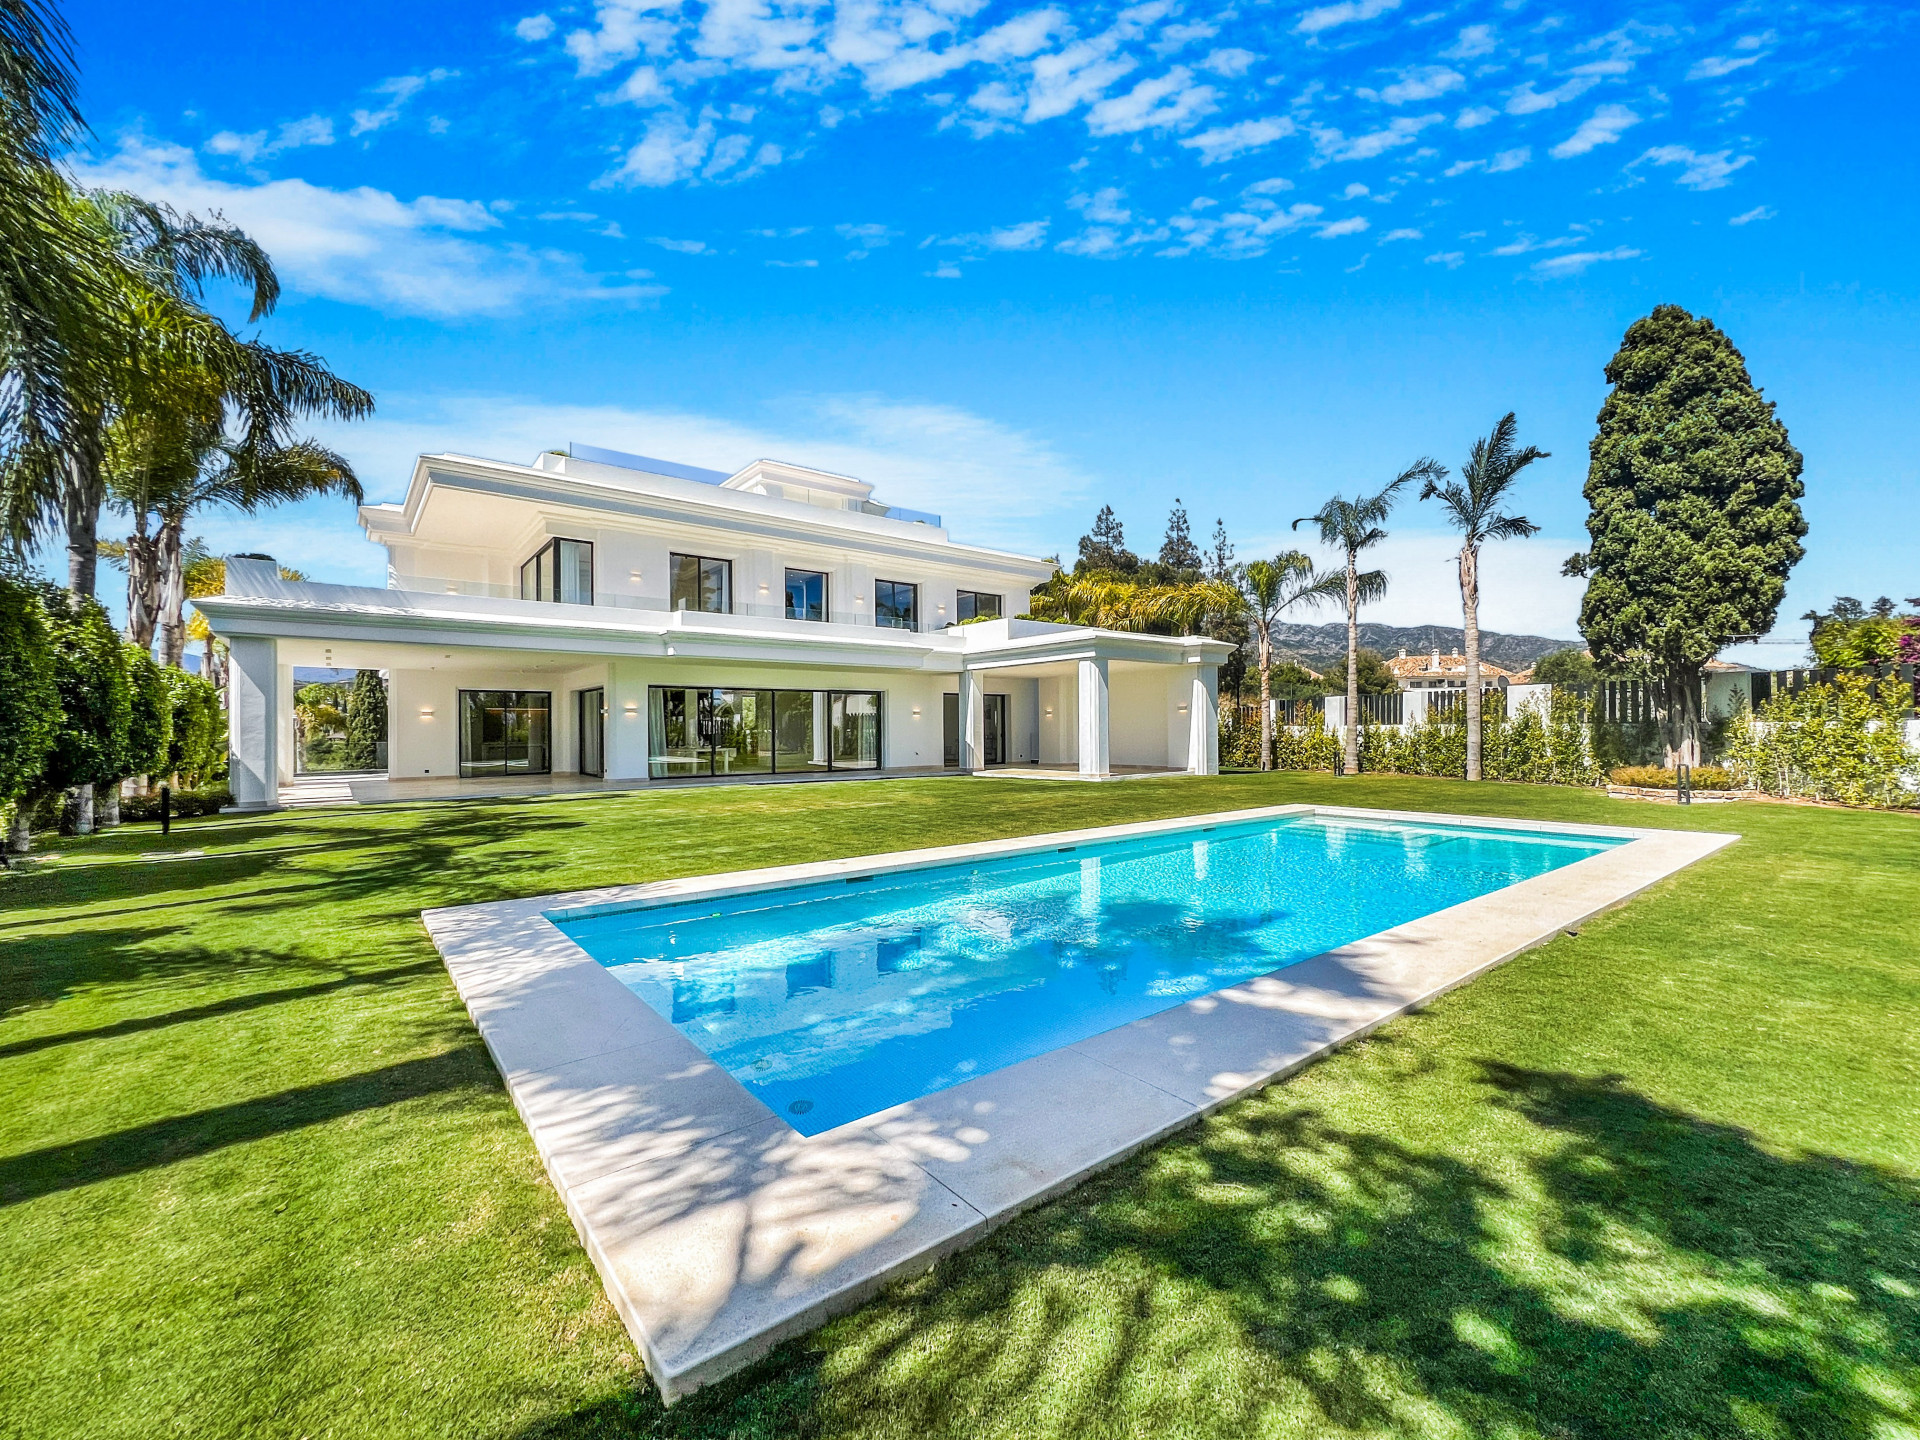 Four amazing villas designed with the highest standards in Lomas de Marbella Club